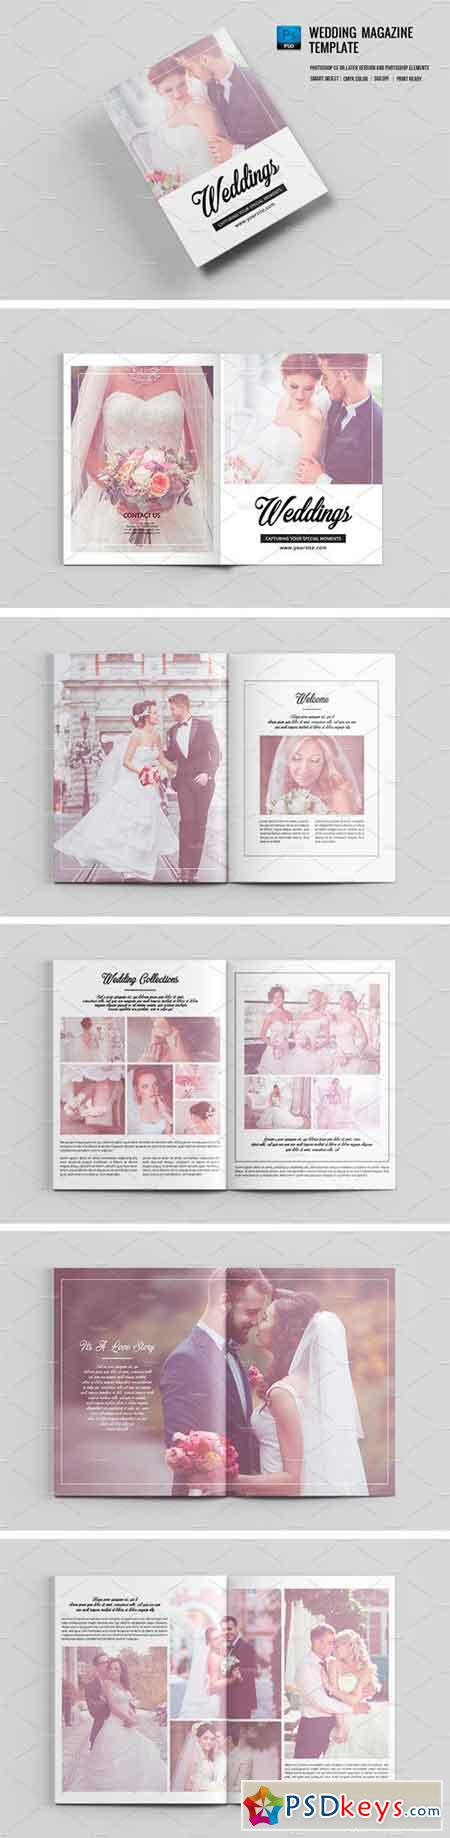 Wedding Photographer Magazine-V671 1291408